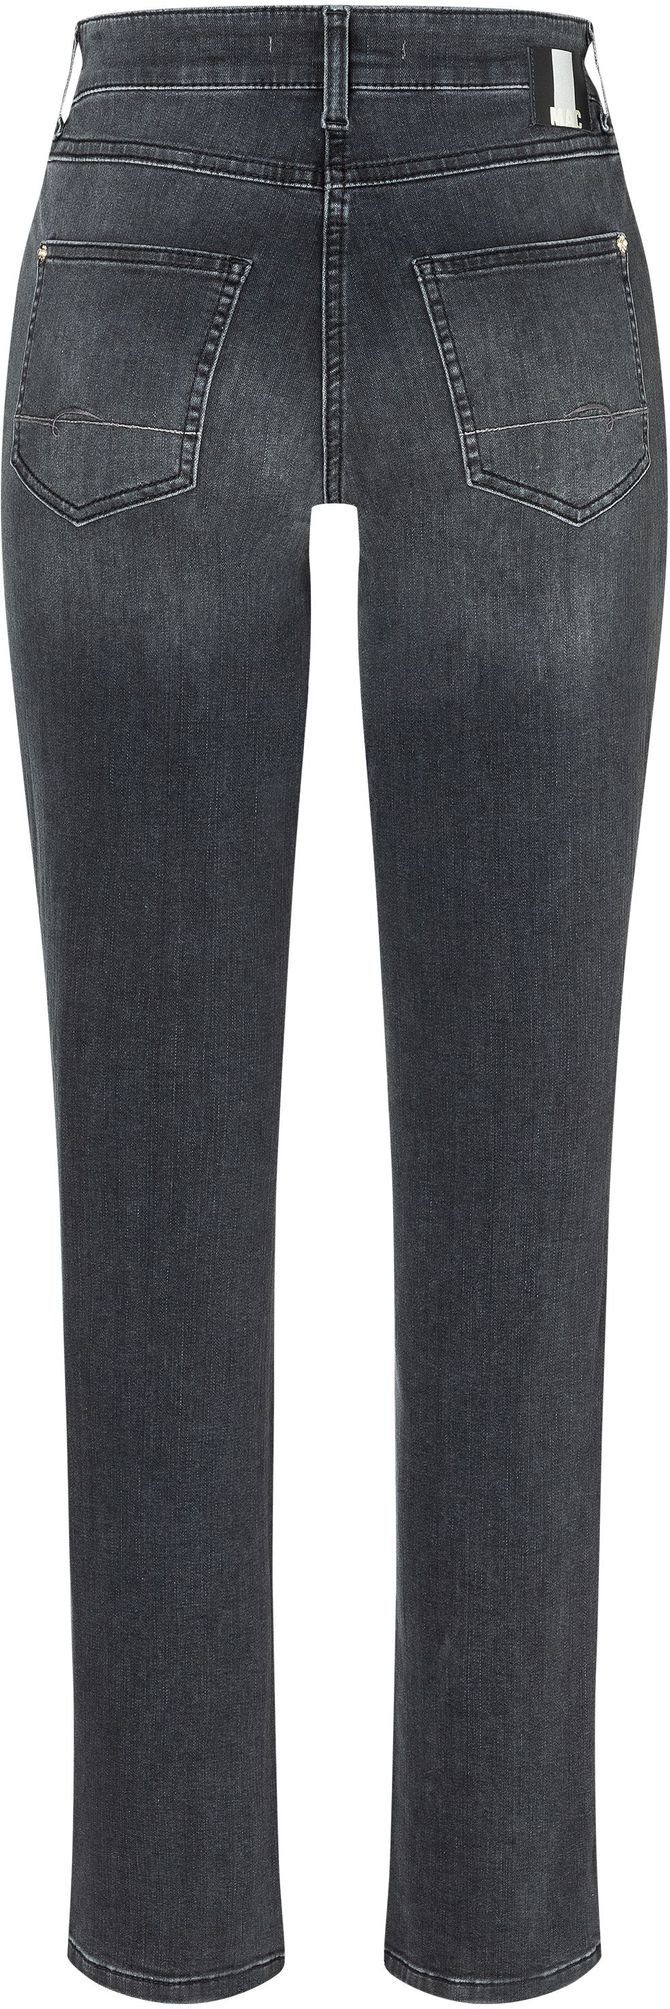 MAC 5-Pocket-Jeans Angela 5240-97-0380L commercial grey (D933)